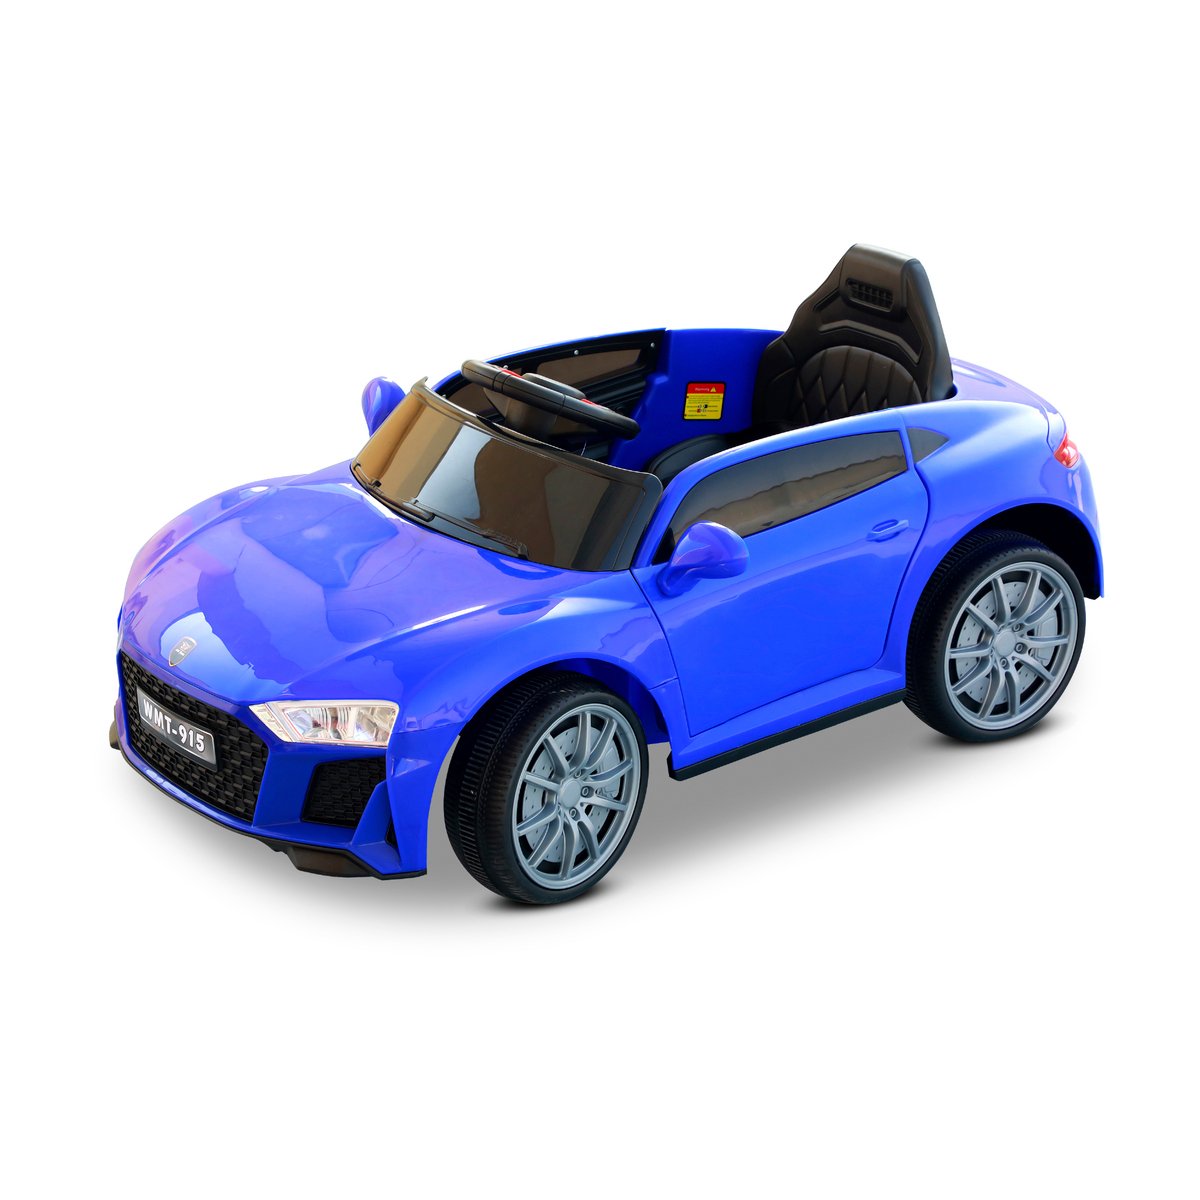 Skid Fusion Child-Motor Car 3290006-2R Assorted